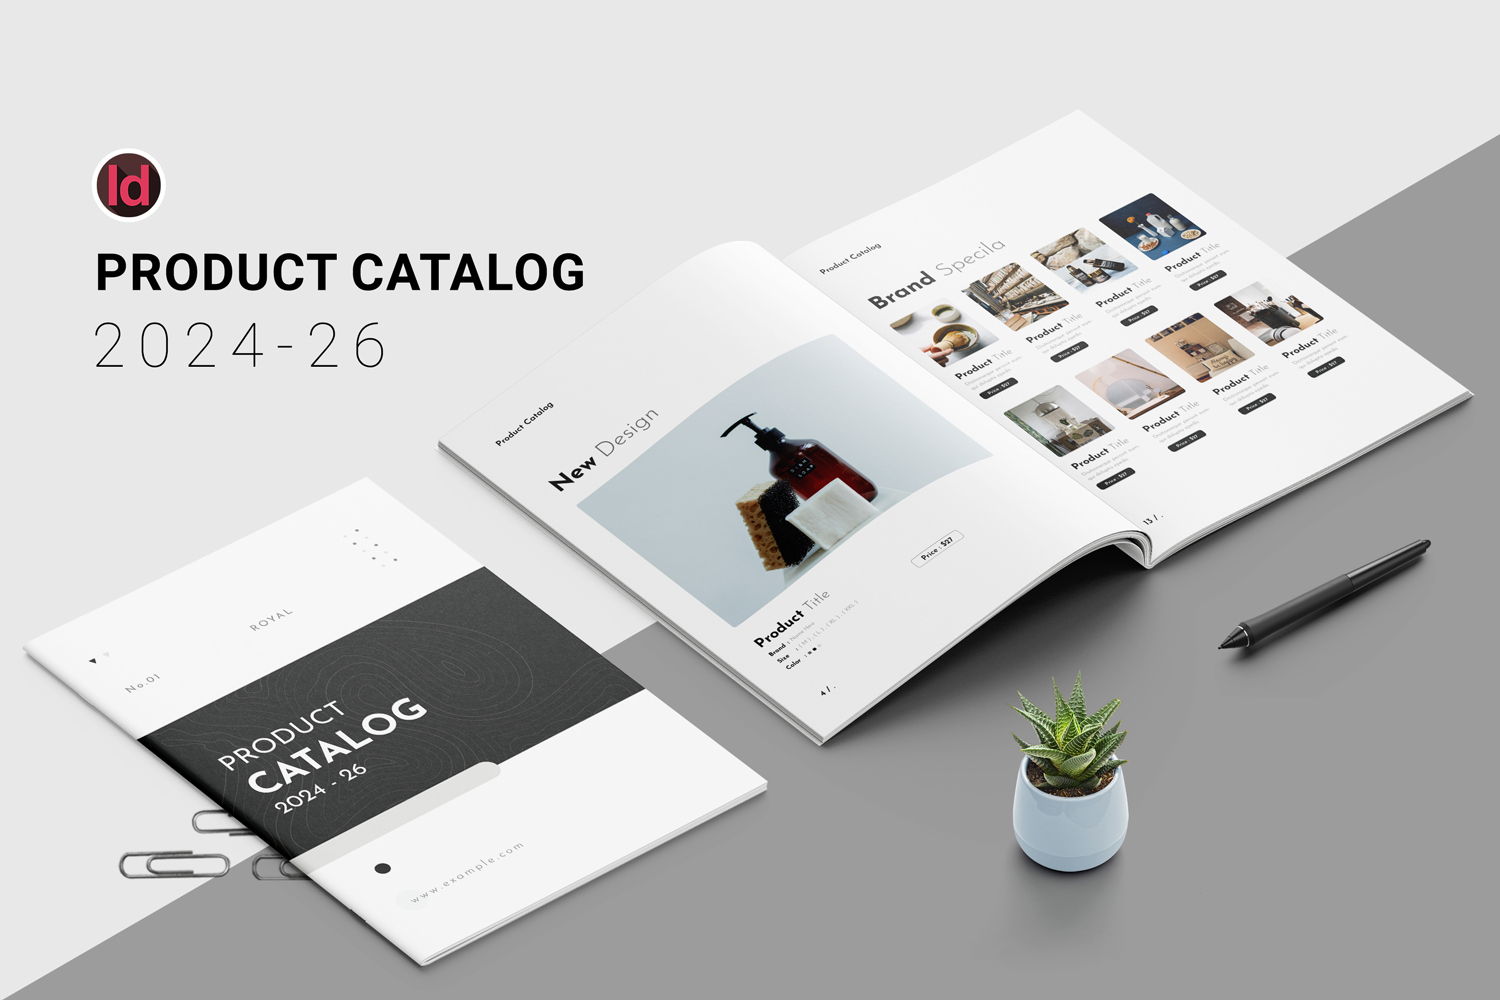 Product Catalog - Brochure Design Template